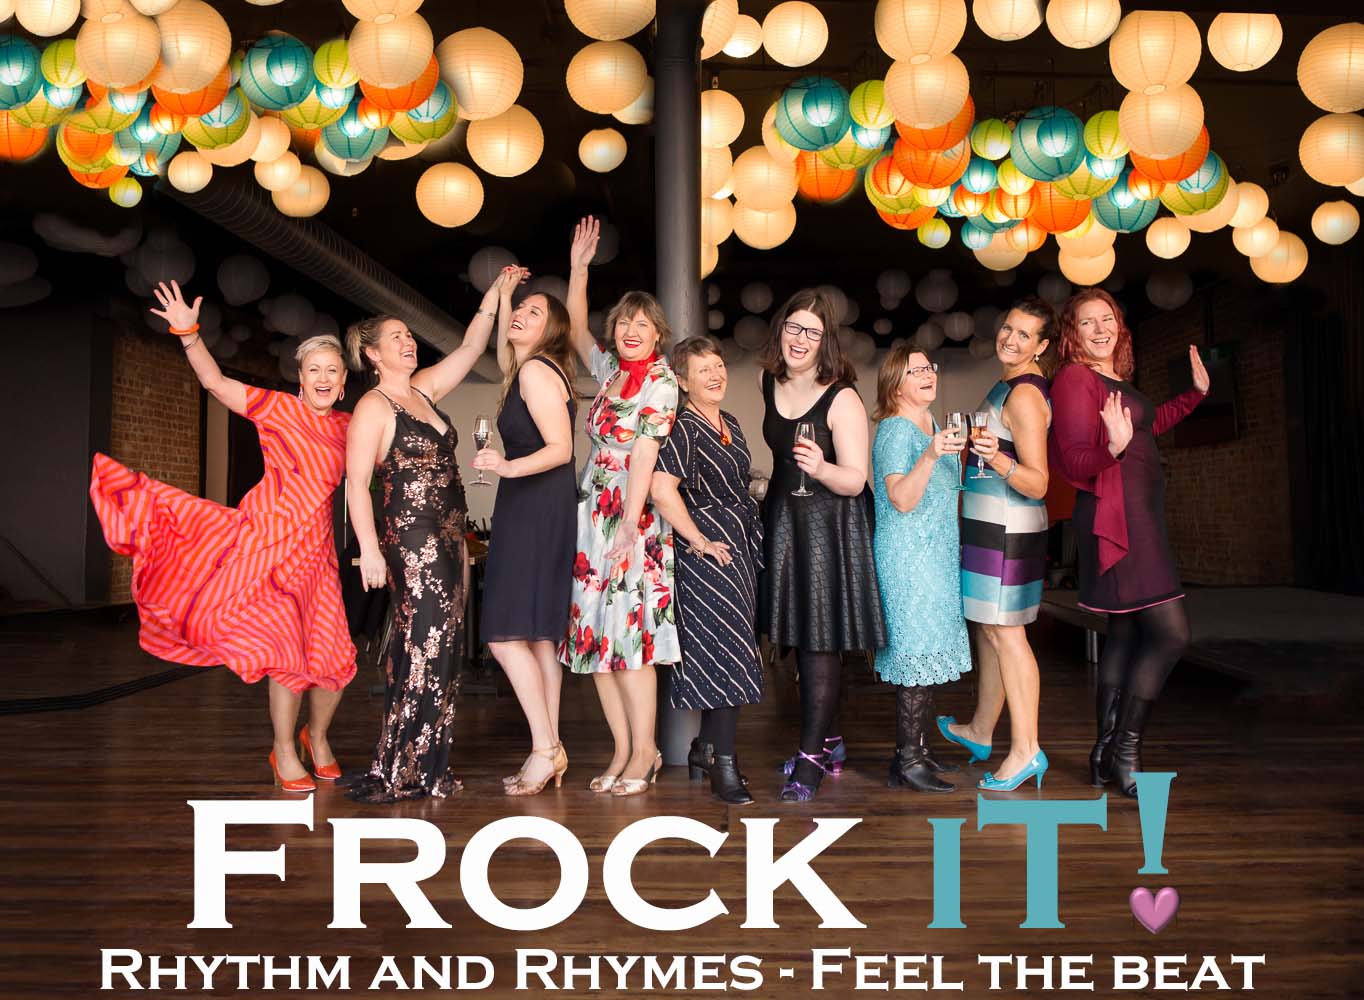 Frock It - Dance Party Events in Dunedin 2020